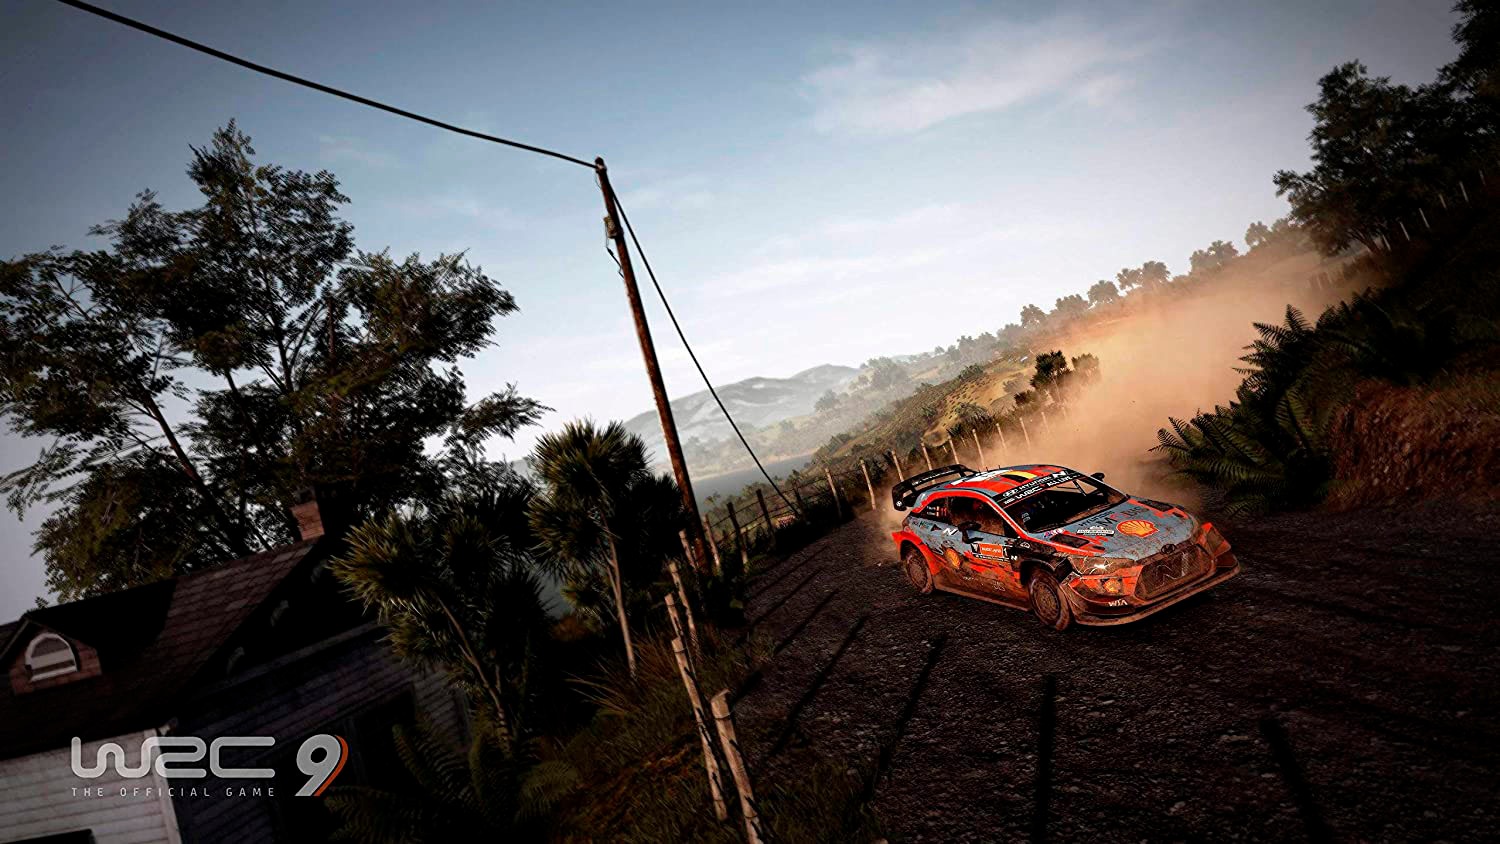 nacon Spielesoftware »WRC 9«, PlayStation 4